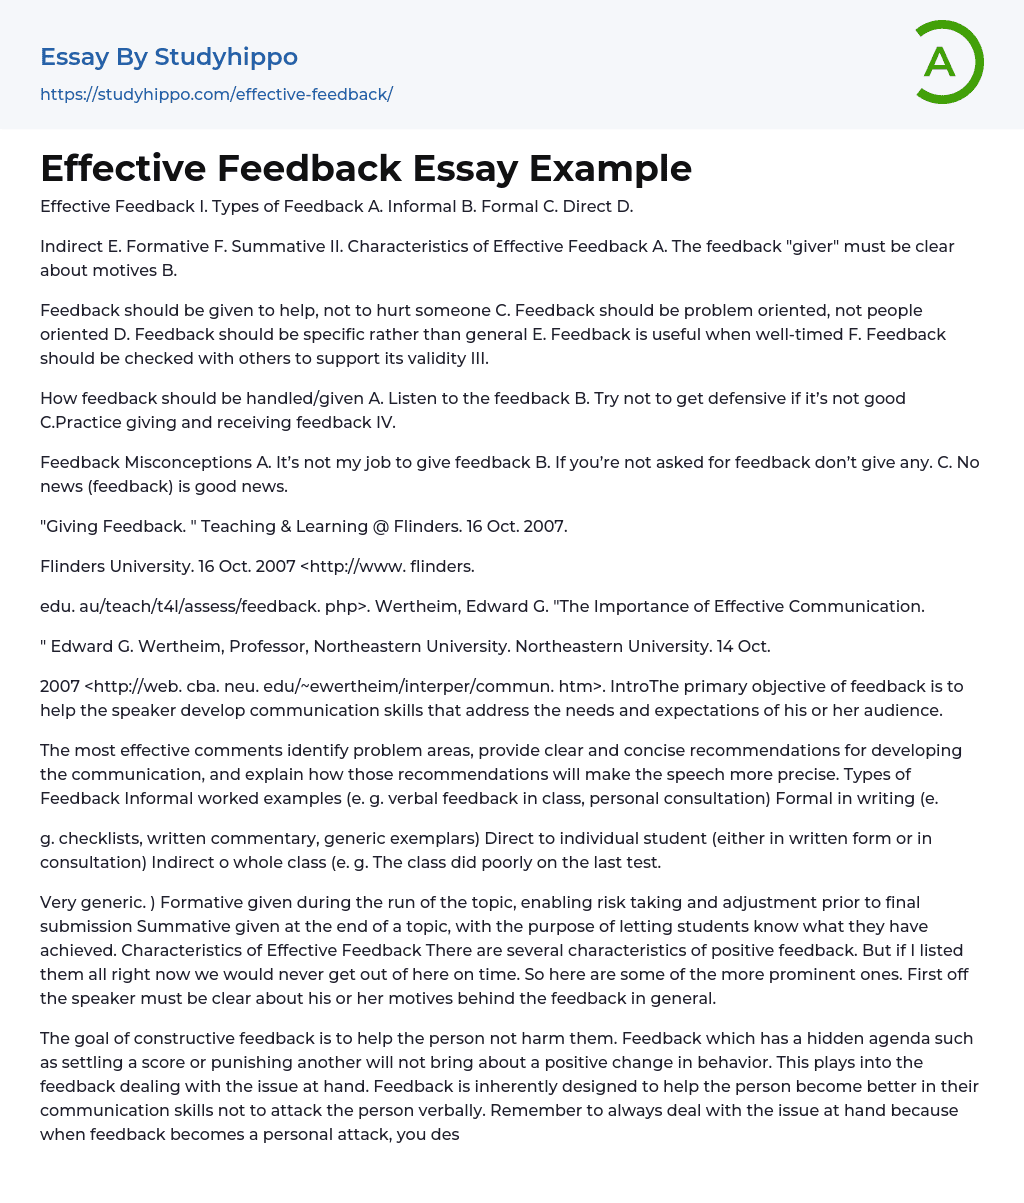 Effective Feedback Essay Example